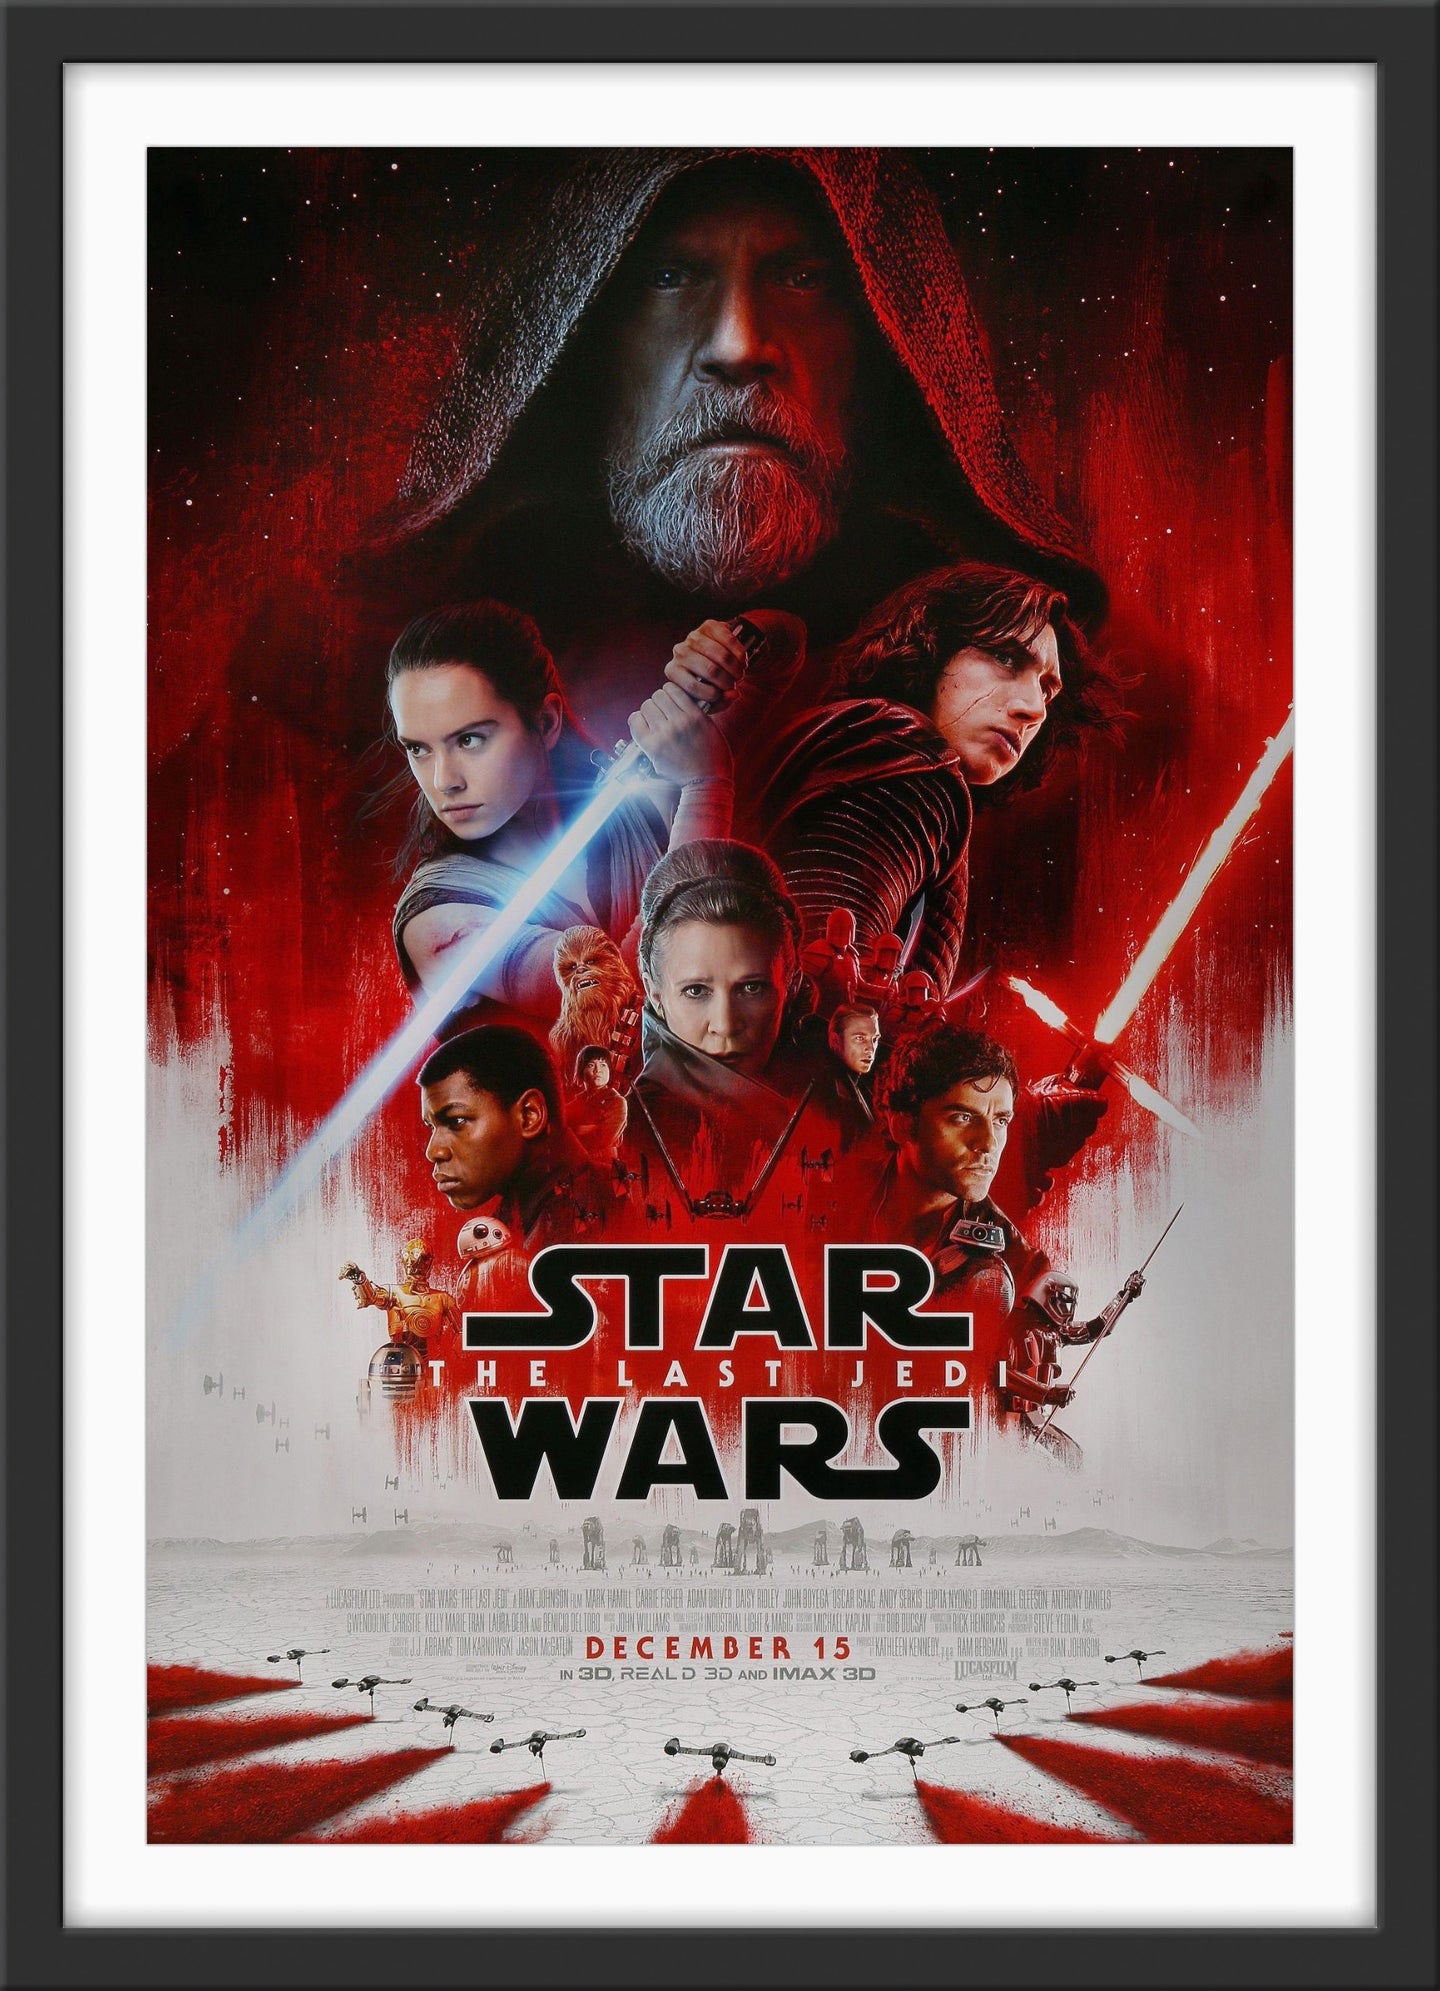 Star Wars The Last Jedi Movie – New Promo Pictures